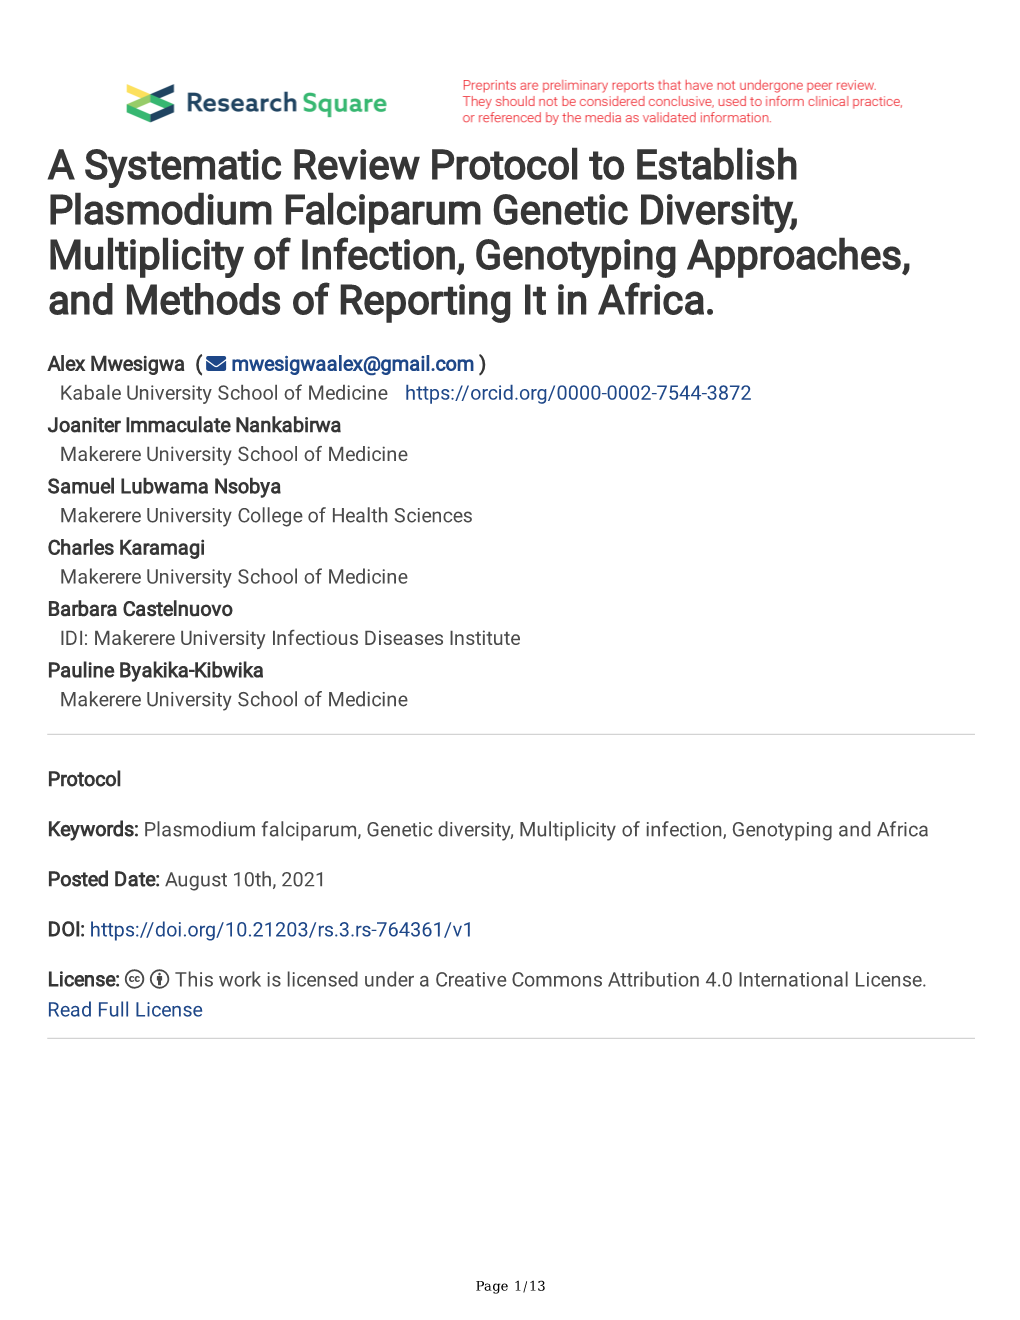 A Systematic Review Protocol to Establish Plasmodium Falciparum